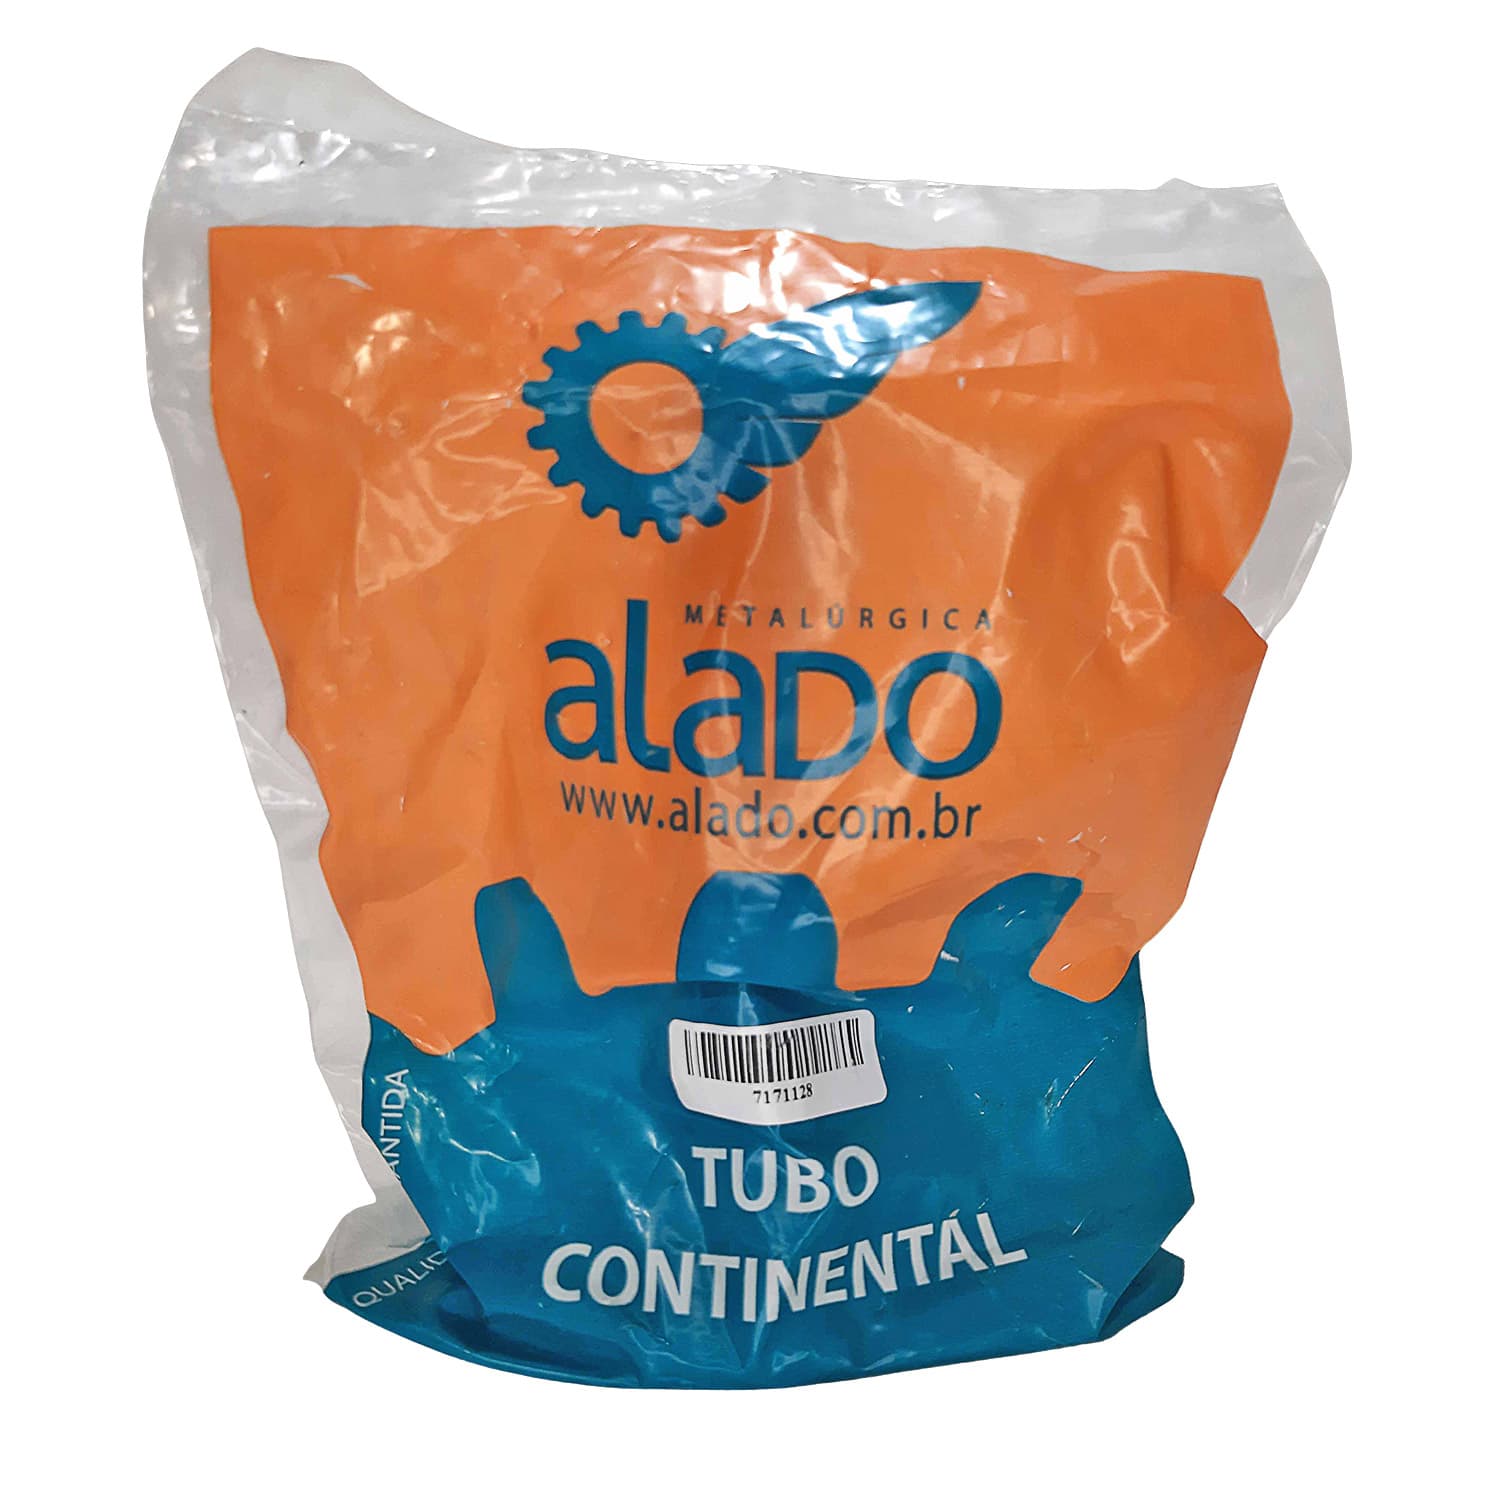 Tubo Ge/continental 10/11/12/13kg Alado 7171128